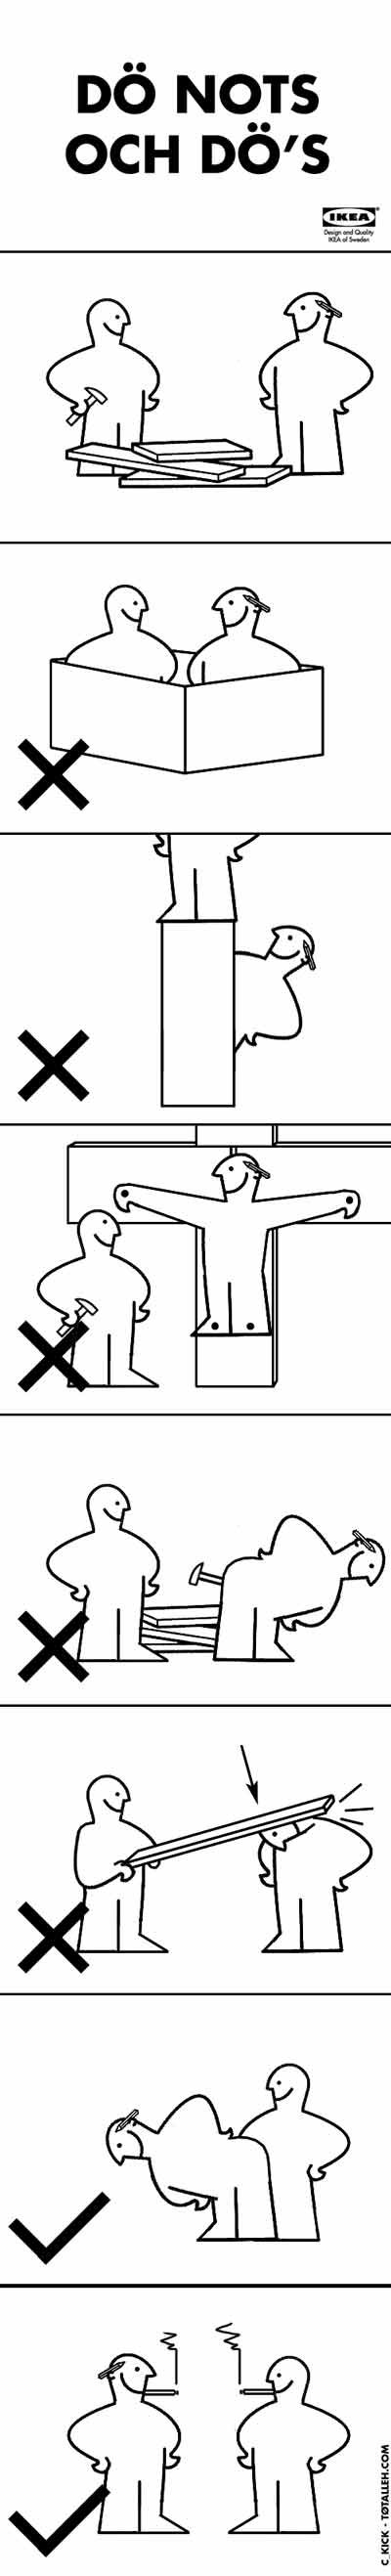 Ikea Directions